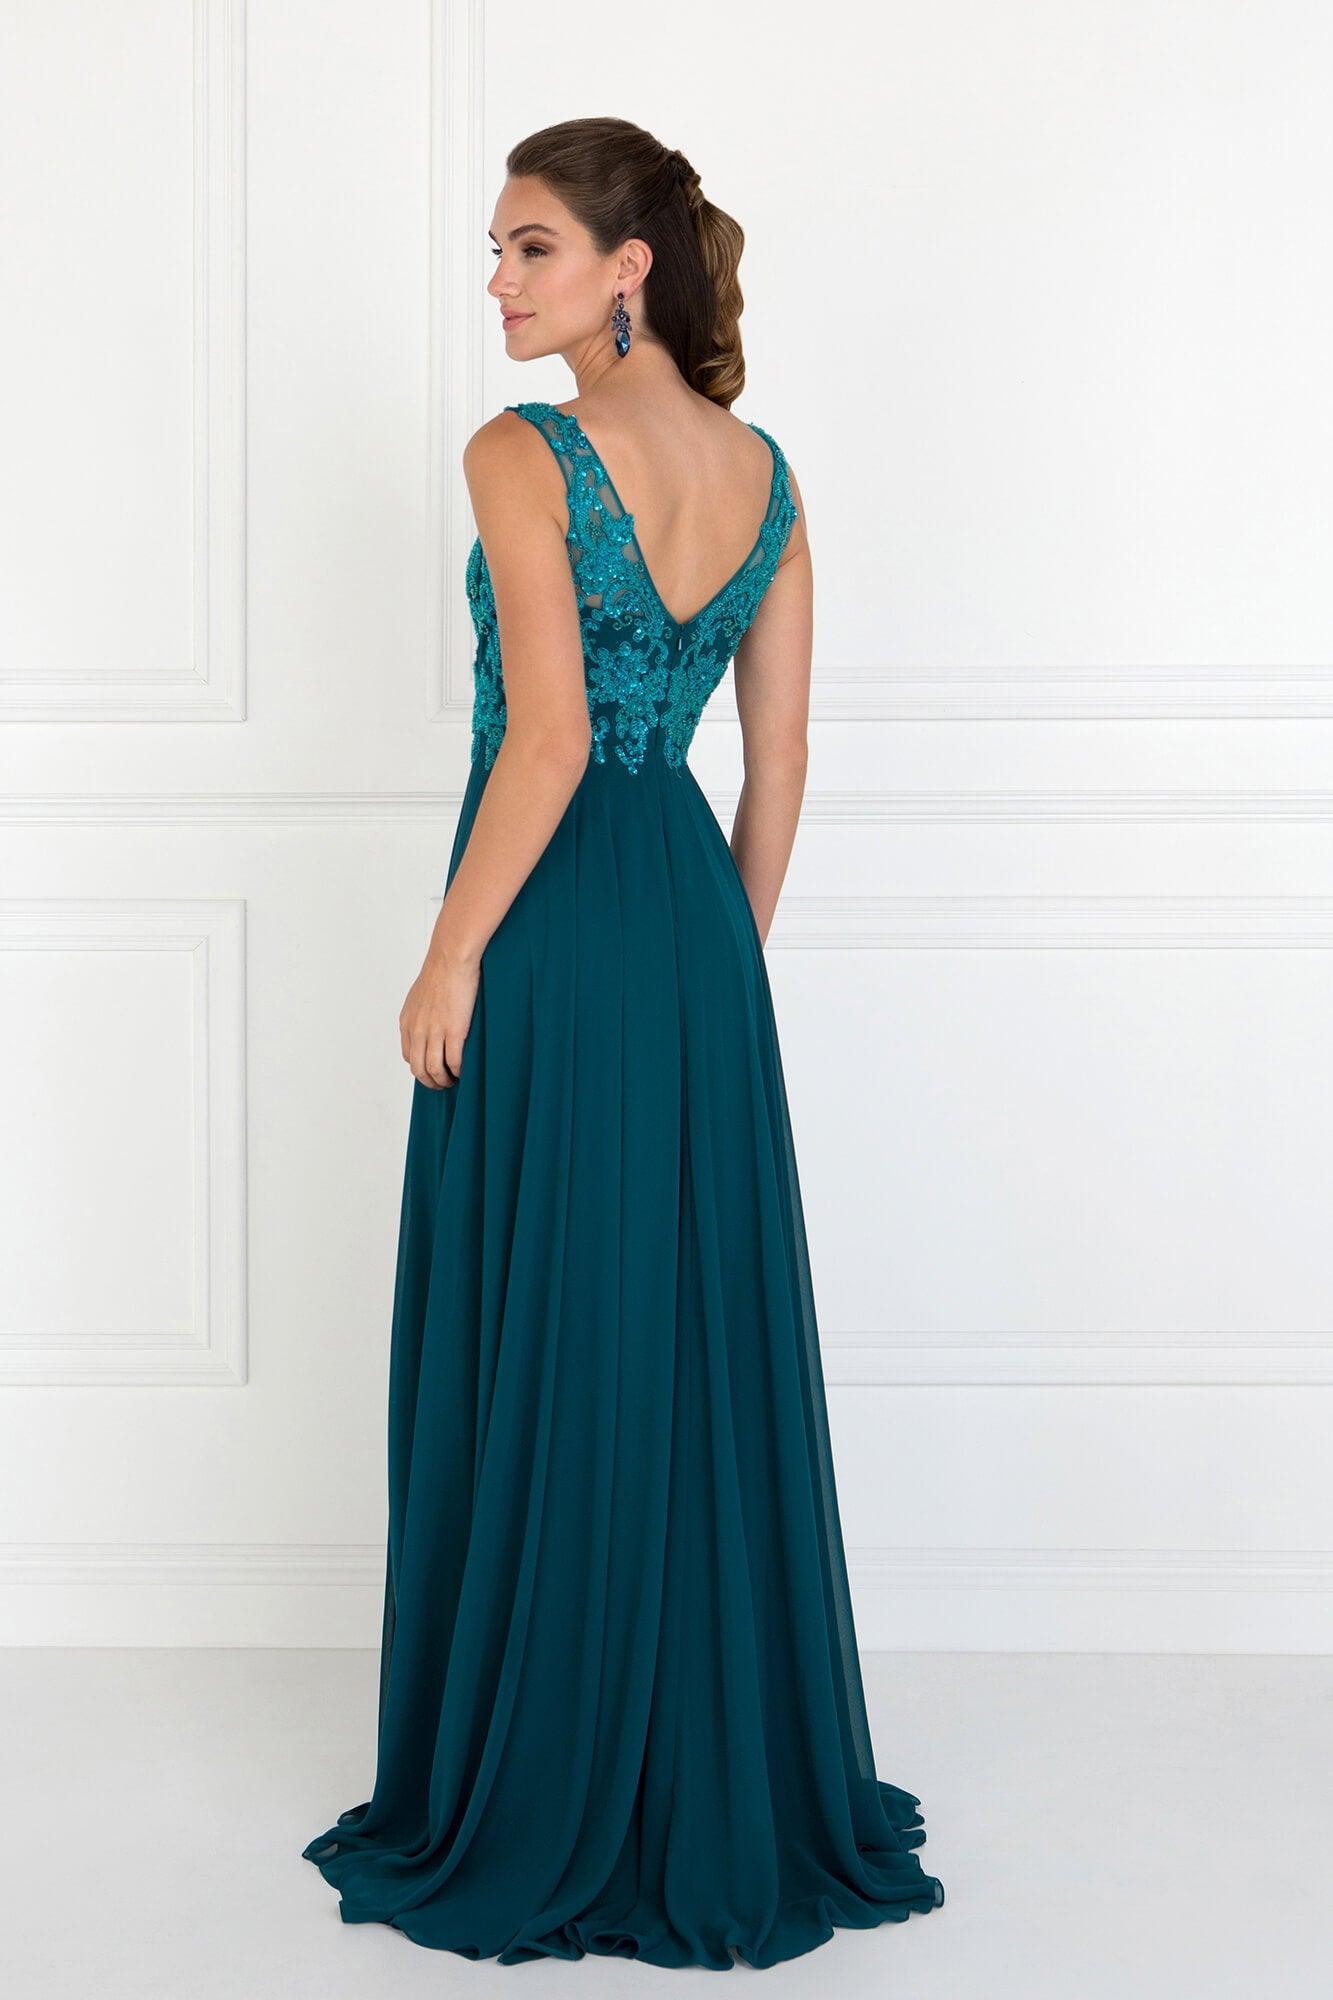 Long Formal Prom Dress Plus Size Evening Gown - The Dress Outlet Elizabeth K